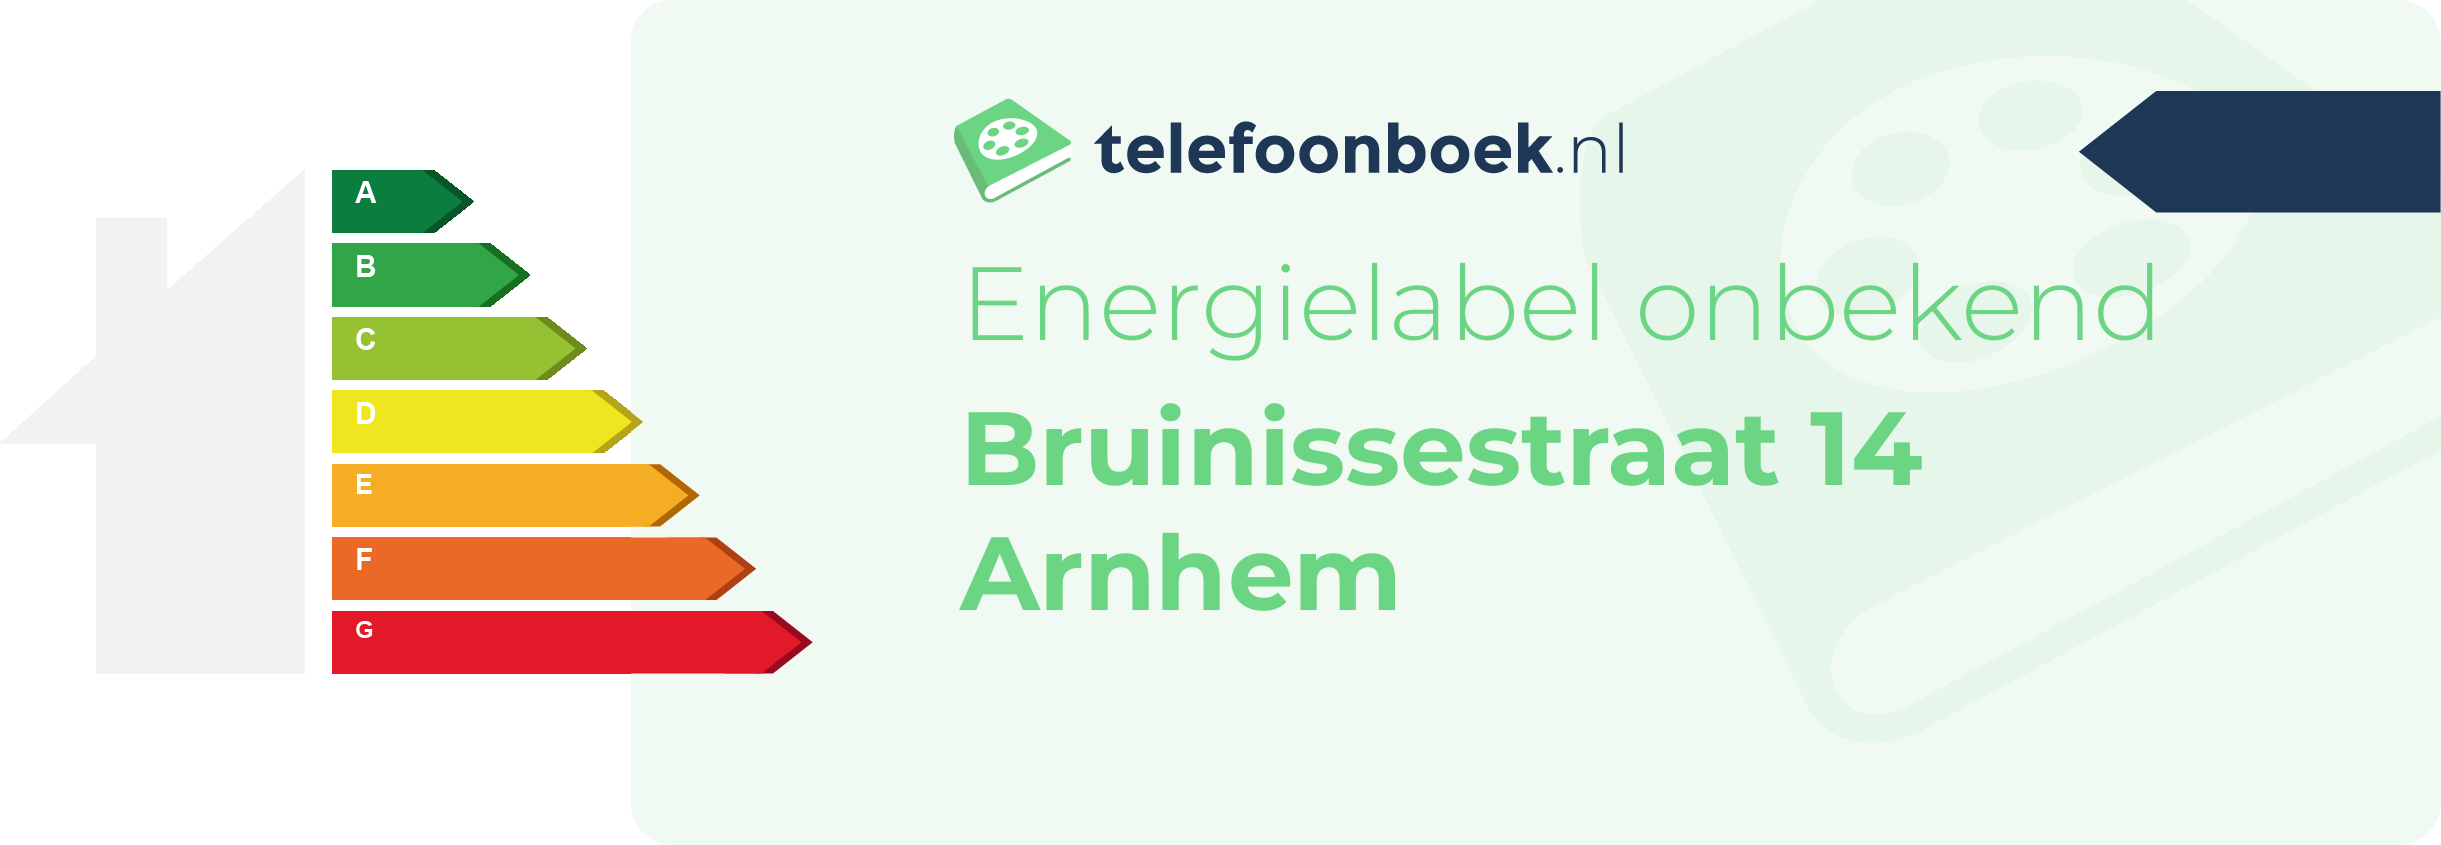 Energielabel Bruinissestraat 14 Arnhem